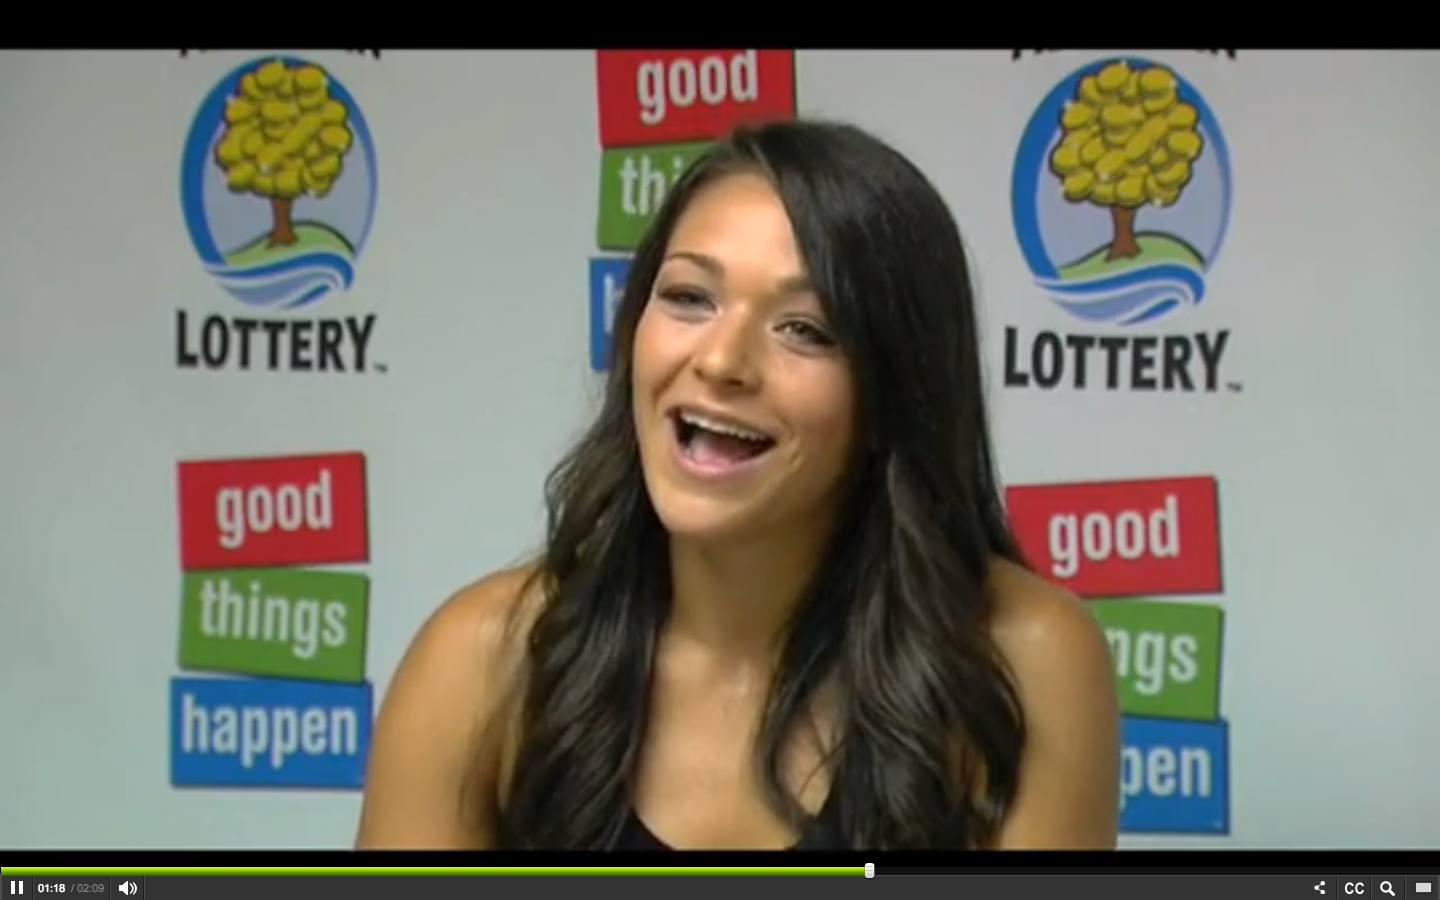 Erika Greene Lottery Winner Where Is She Now